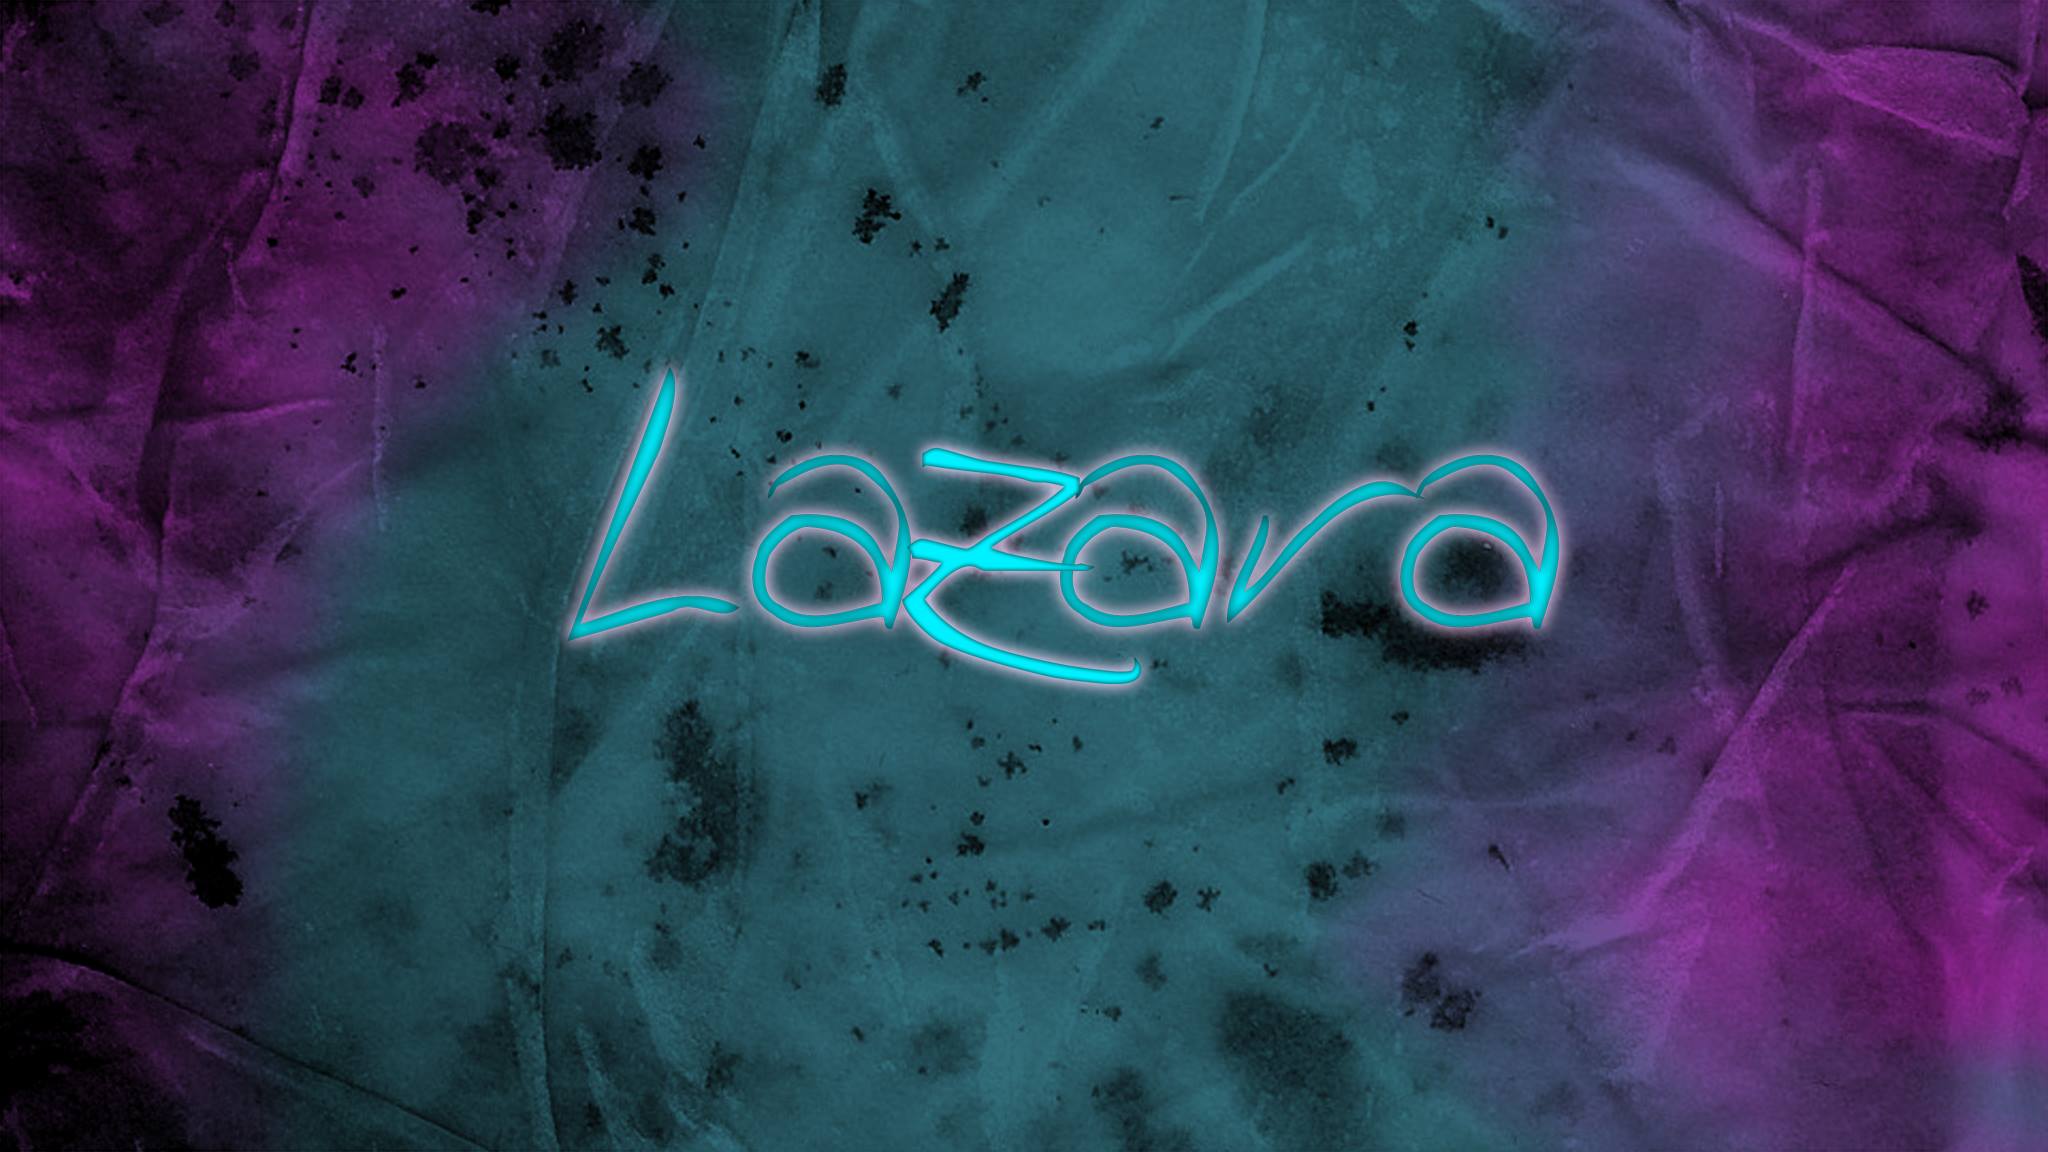 LAZARA picture